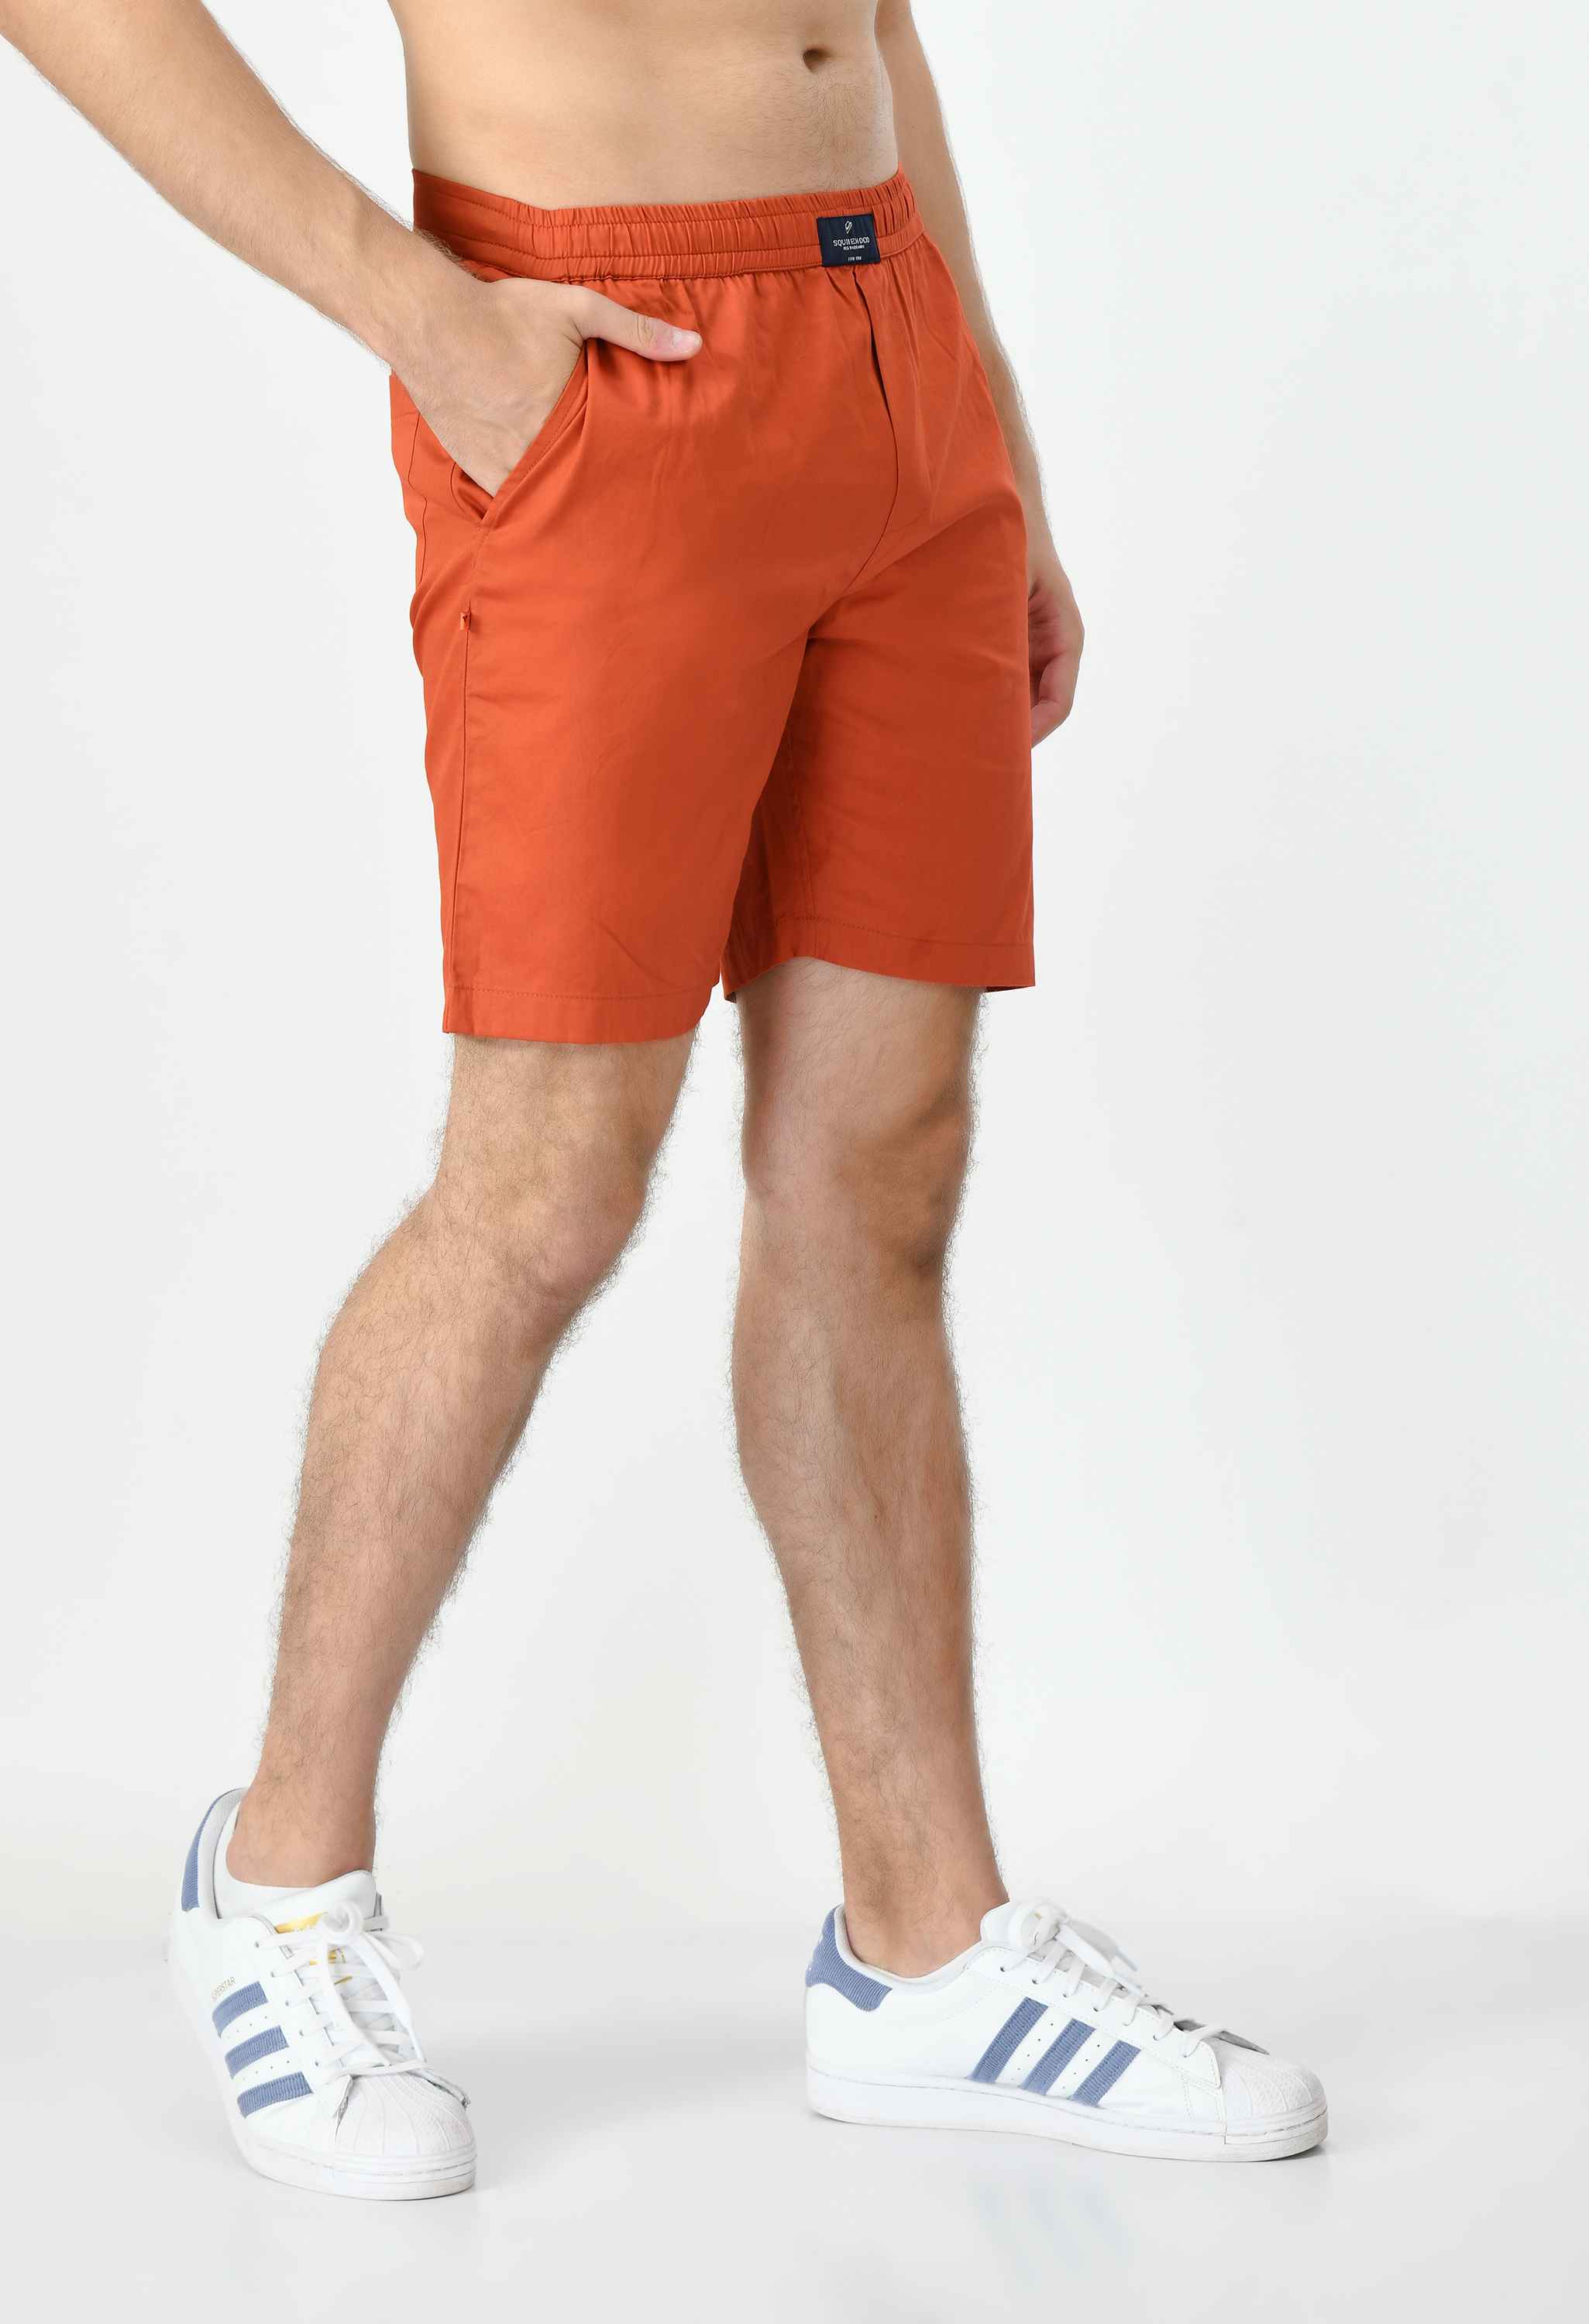 Men's Cotton Twill Solid Boxer with Side Pocket - Orange